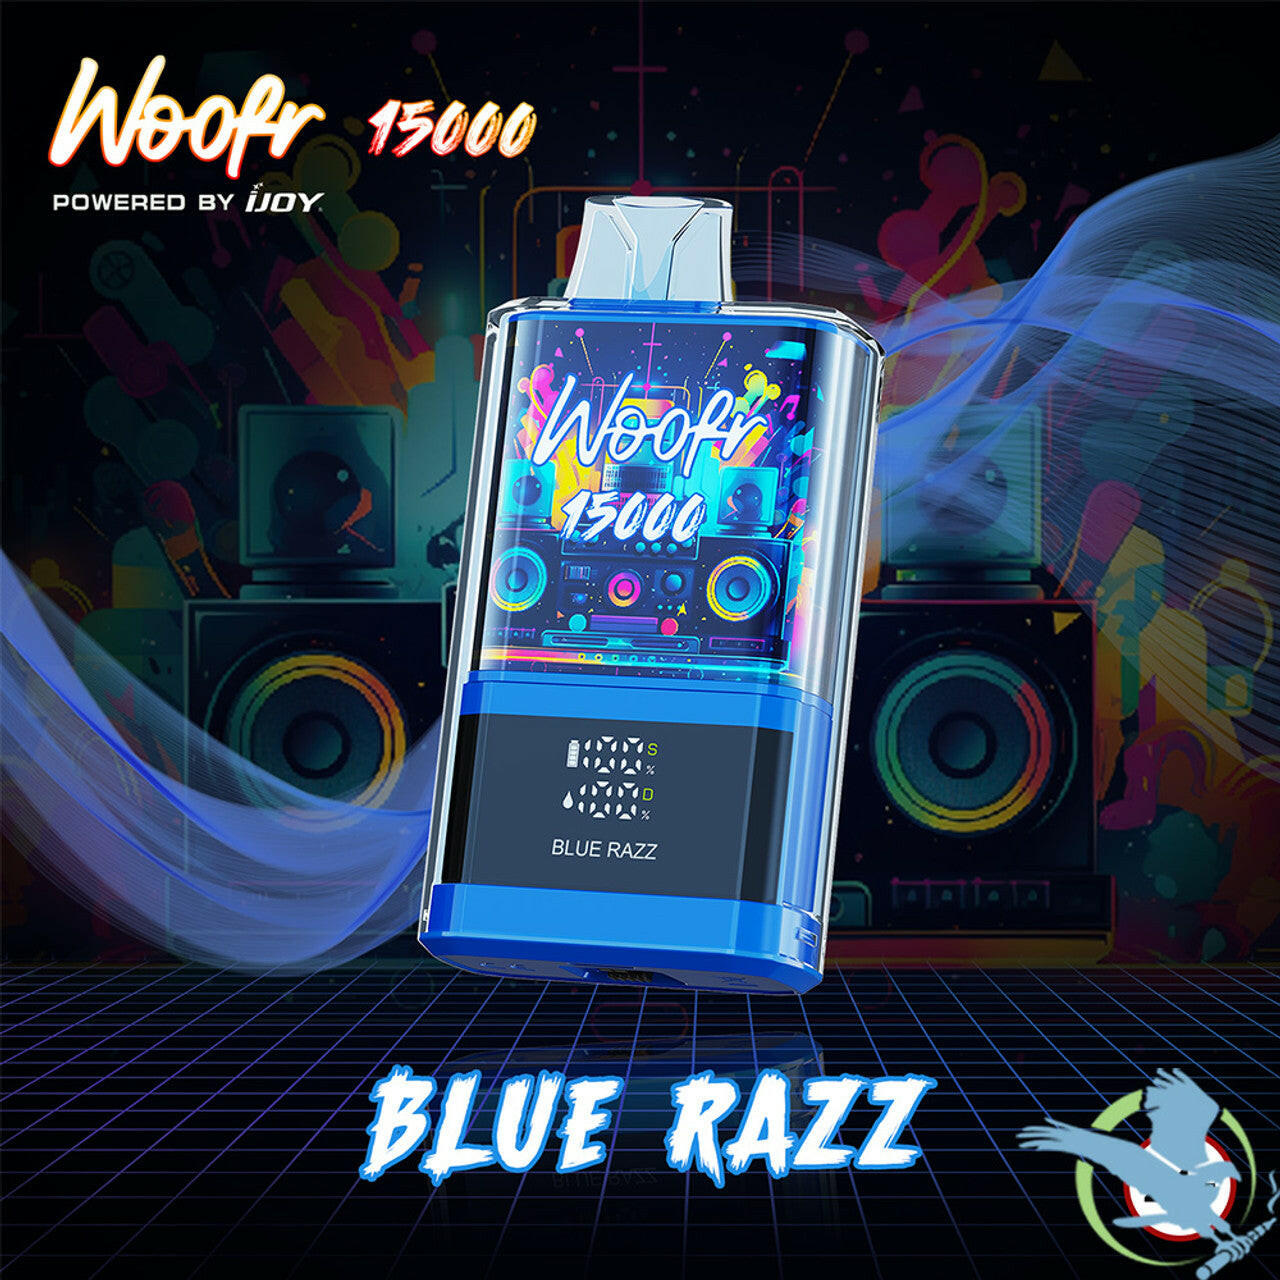 Woofr 15000 Disposable - Blue Razz